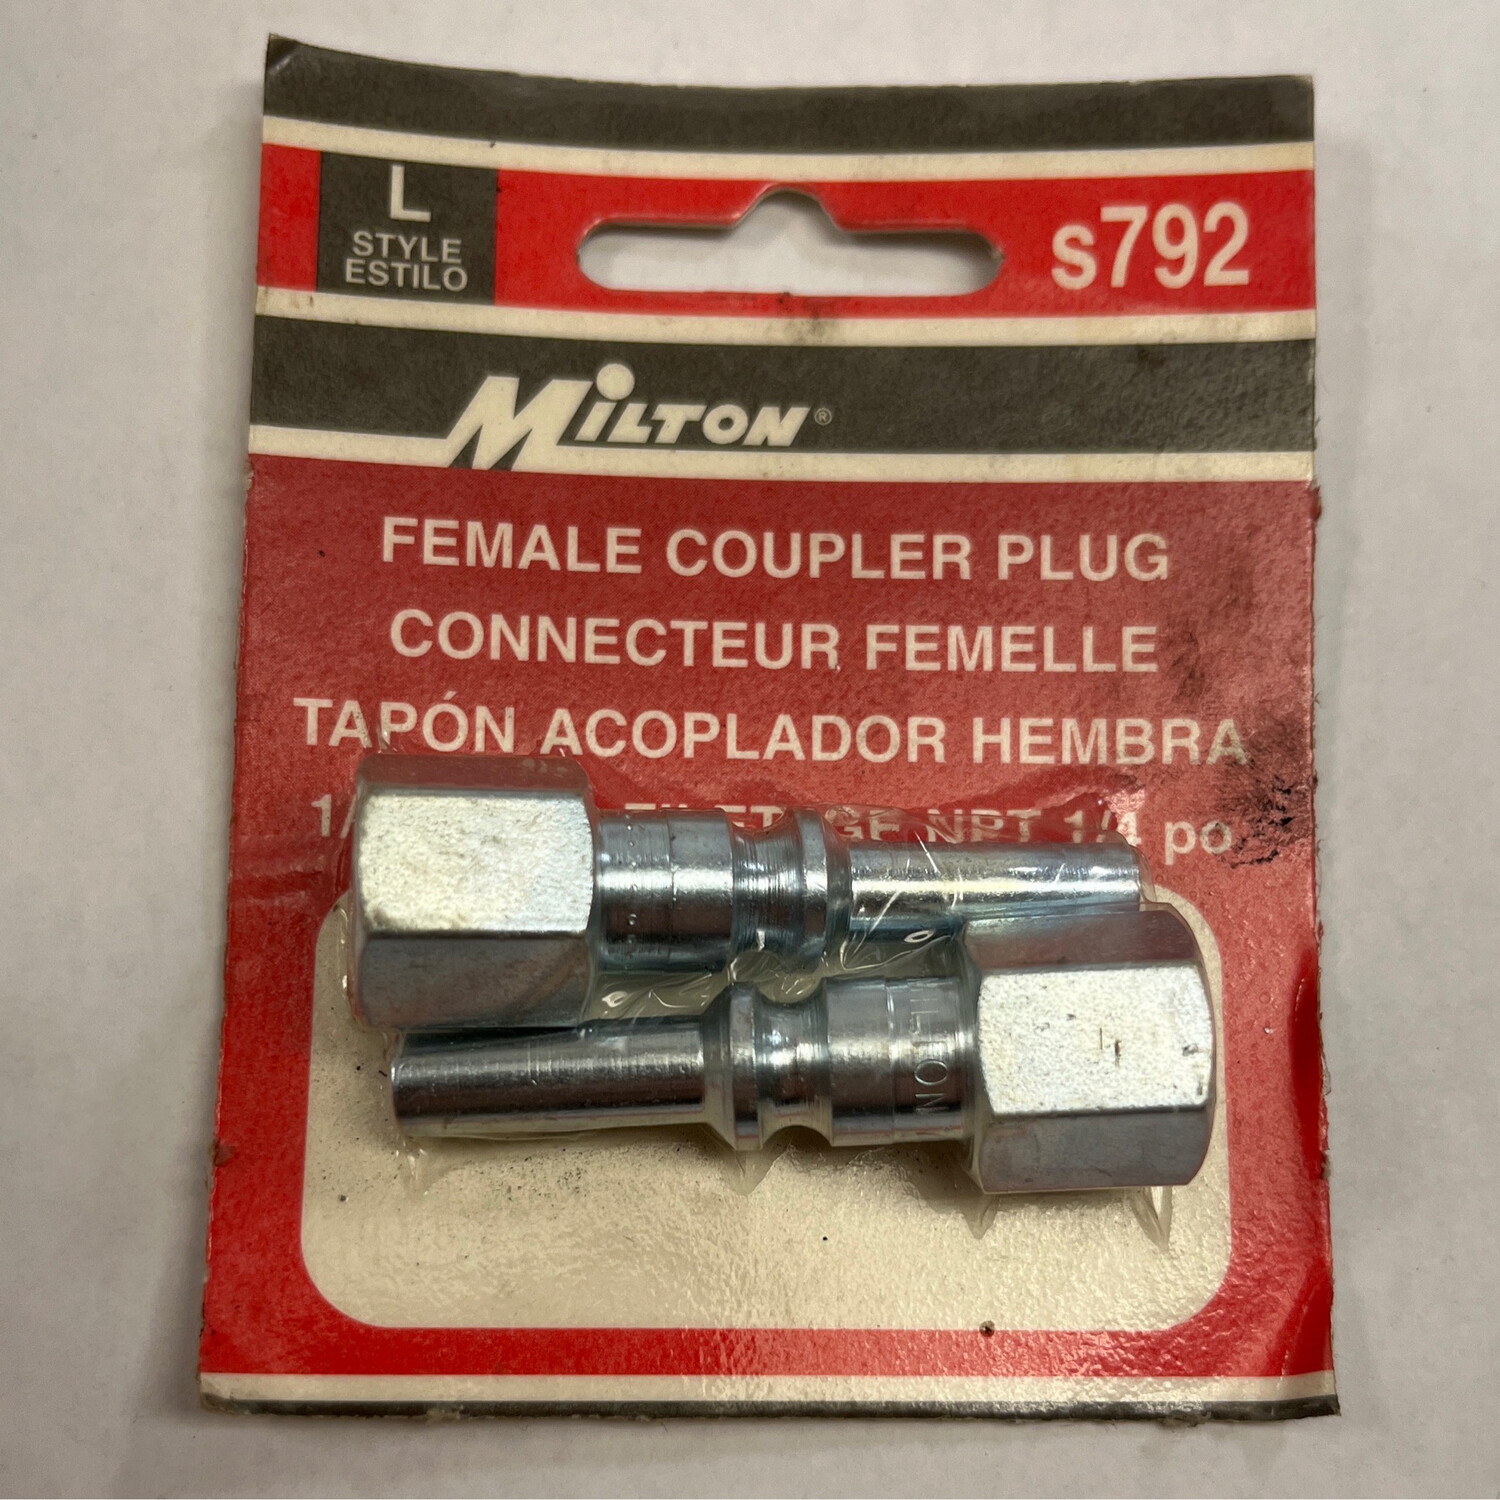 Milton 1/4” Female Coupler Plug, S792